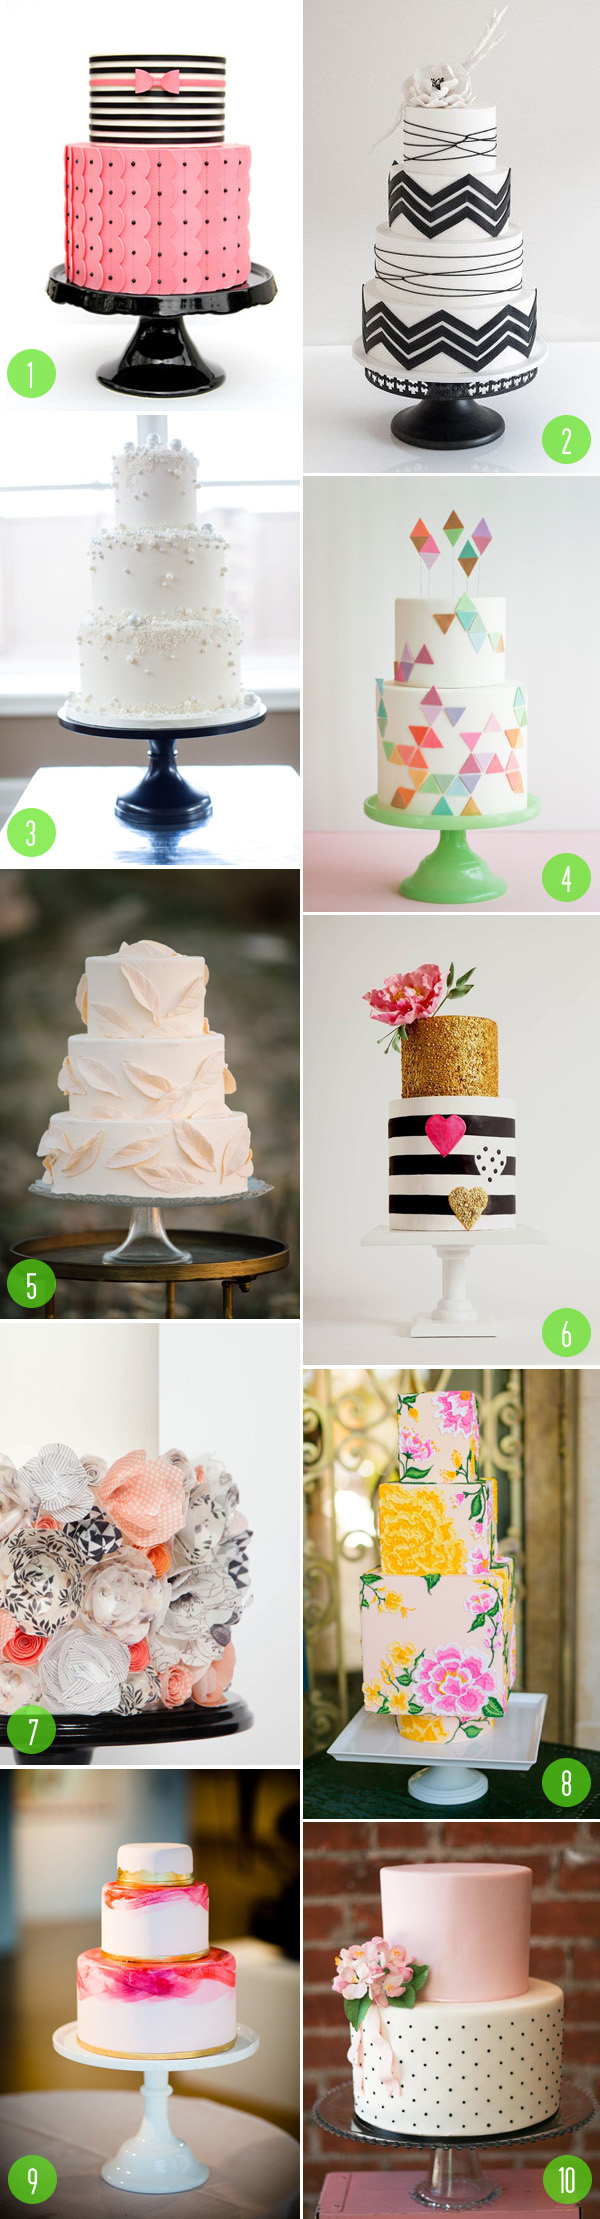 top 10: modern cakes 7